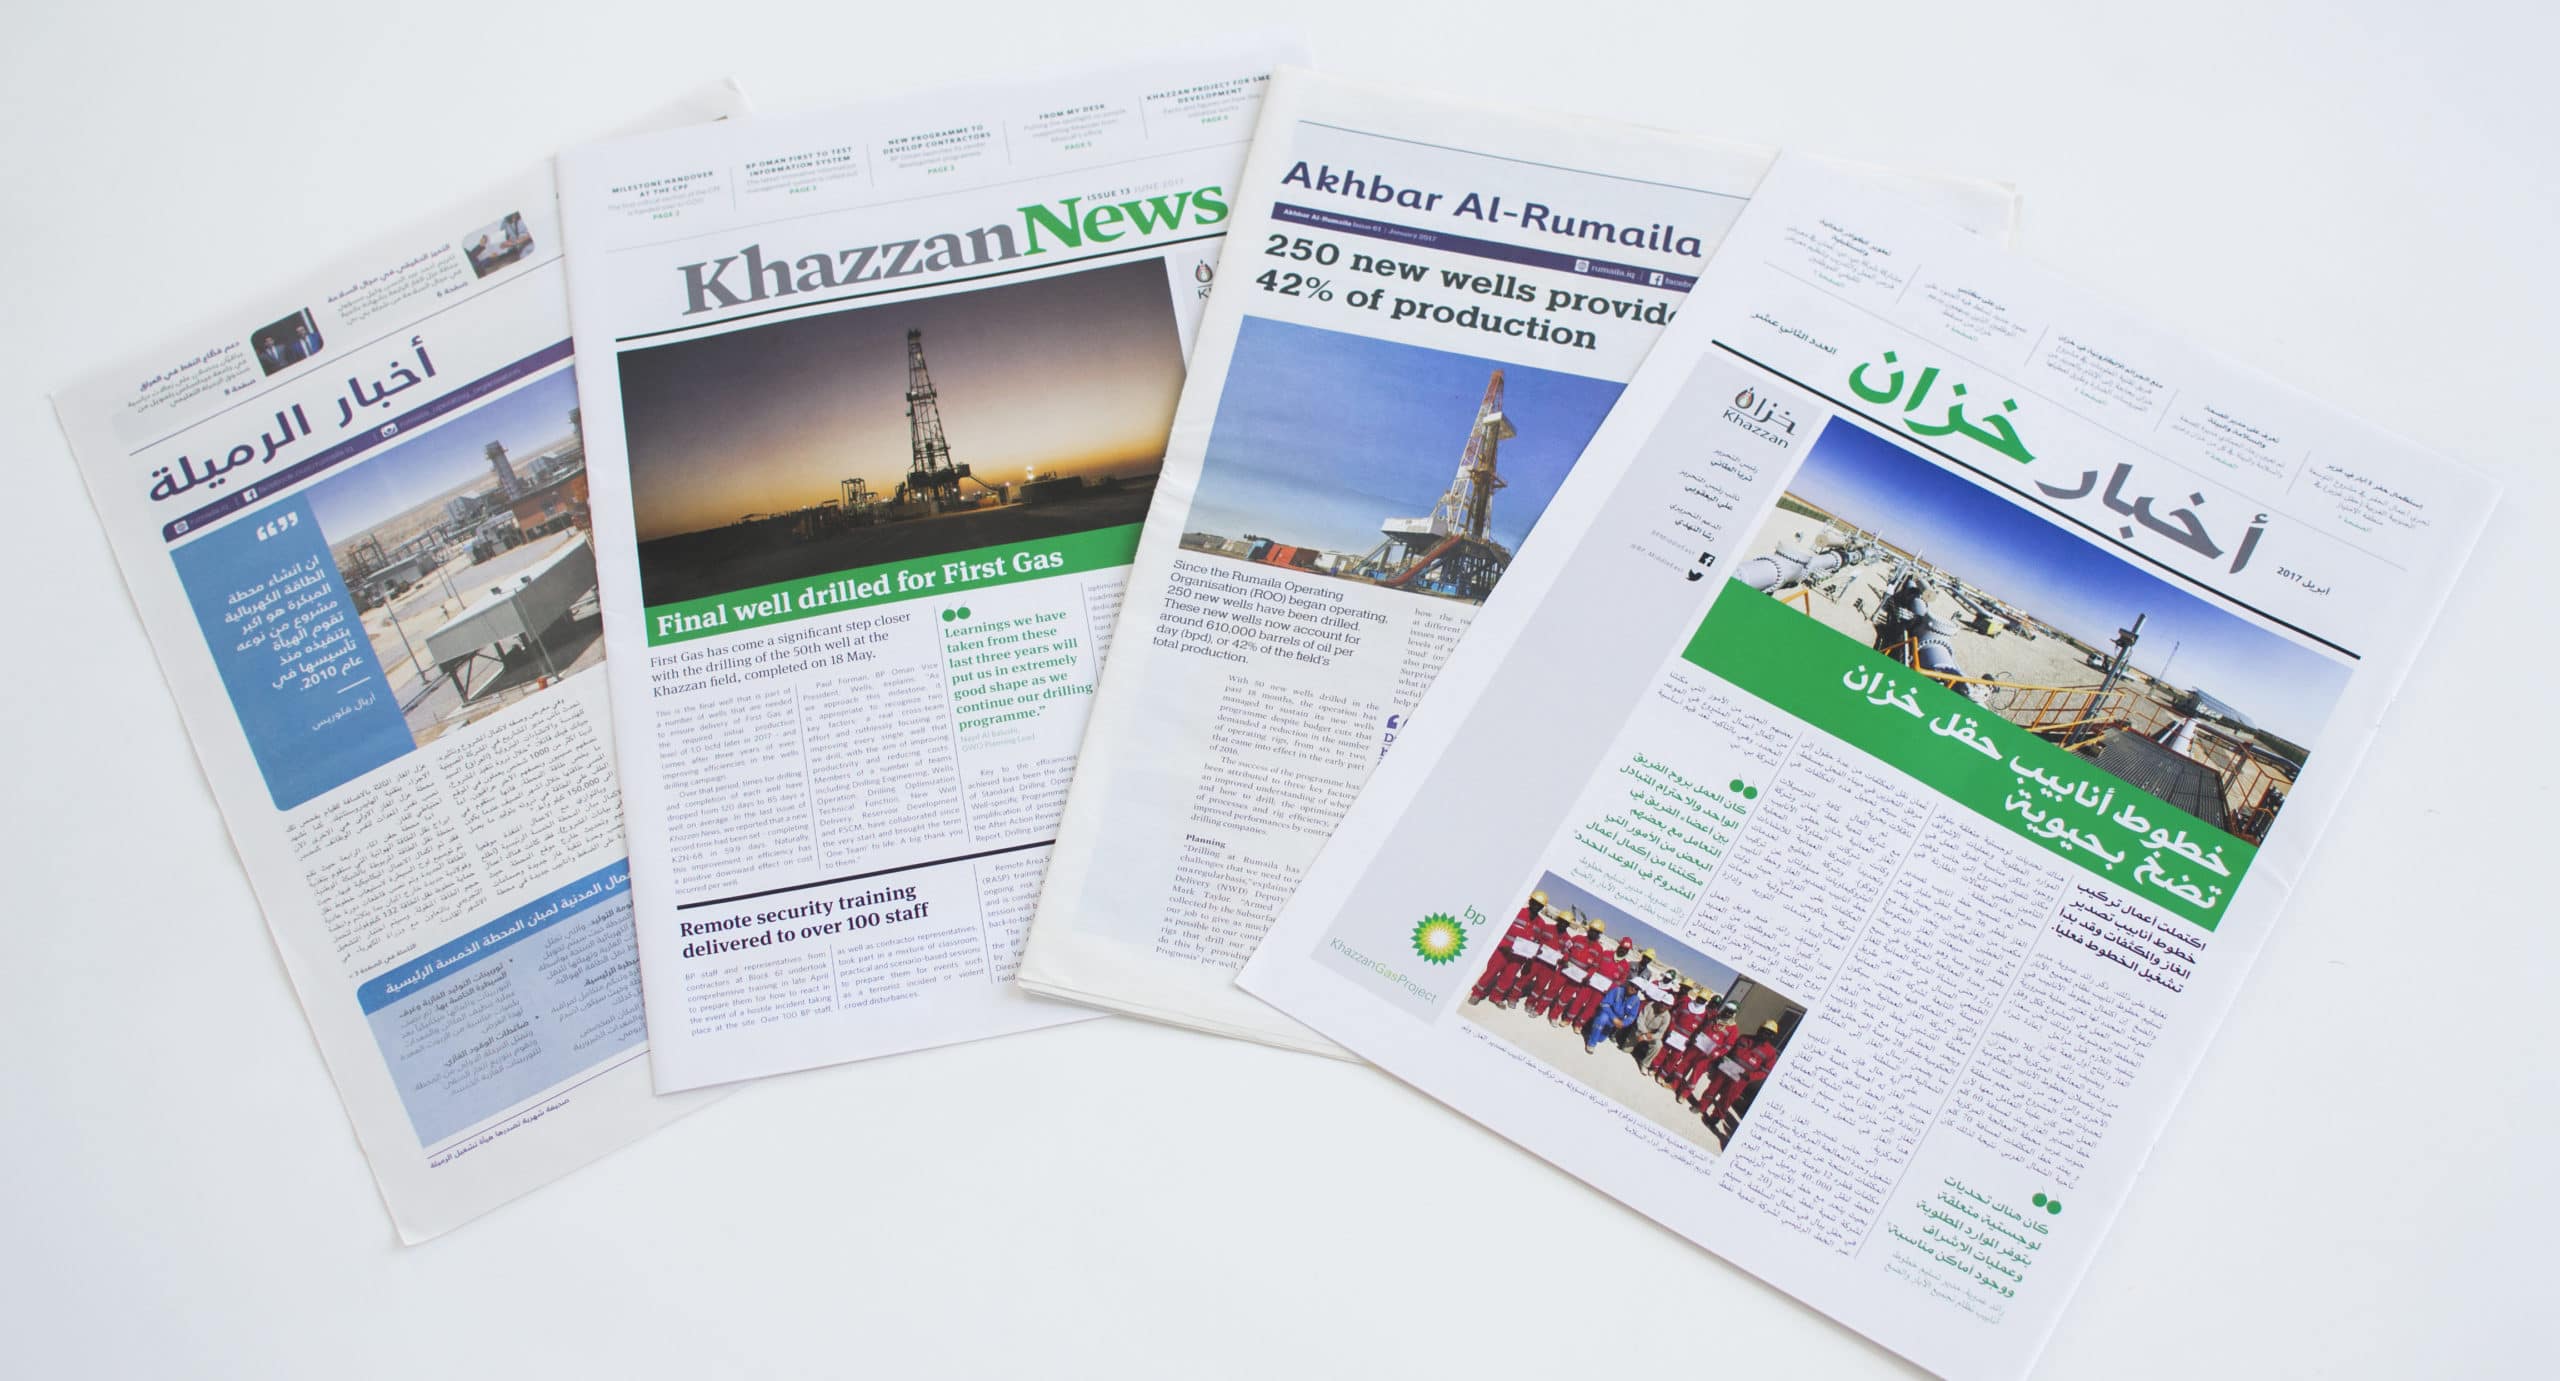 Four newspaper showing Khazzan news and Rumaila newspaper